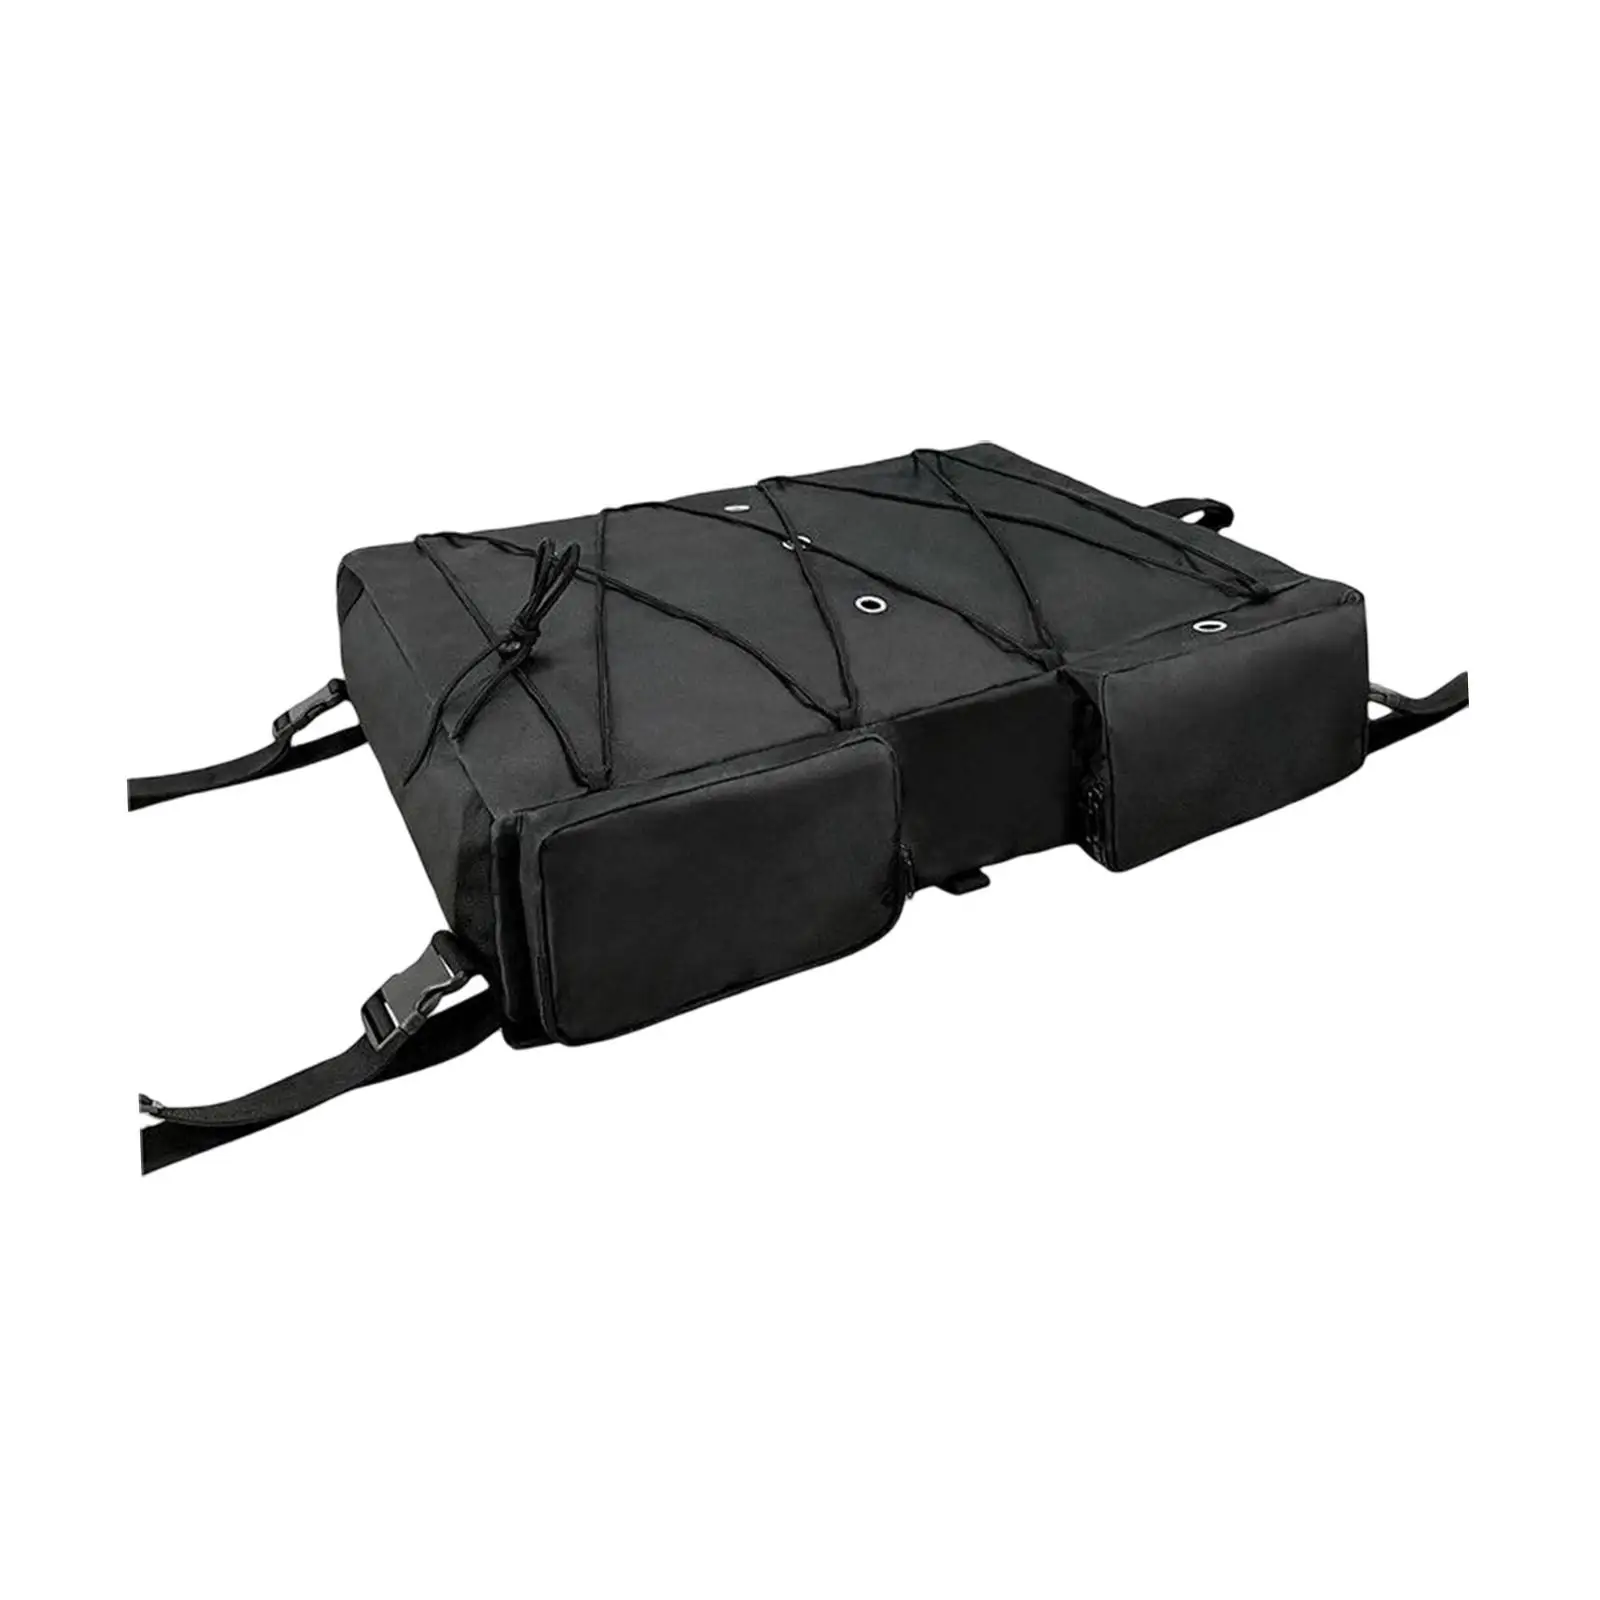 T Top Storage Bag Waterproof Life Vests Storage Bag for Outdoor Camping